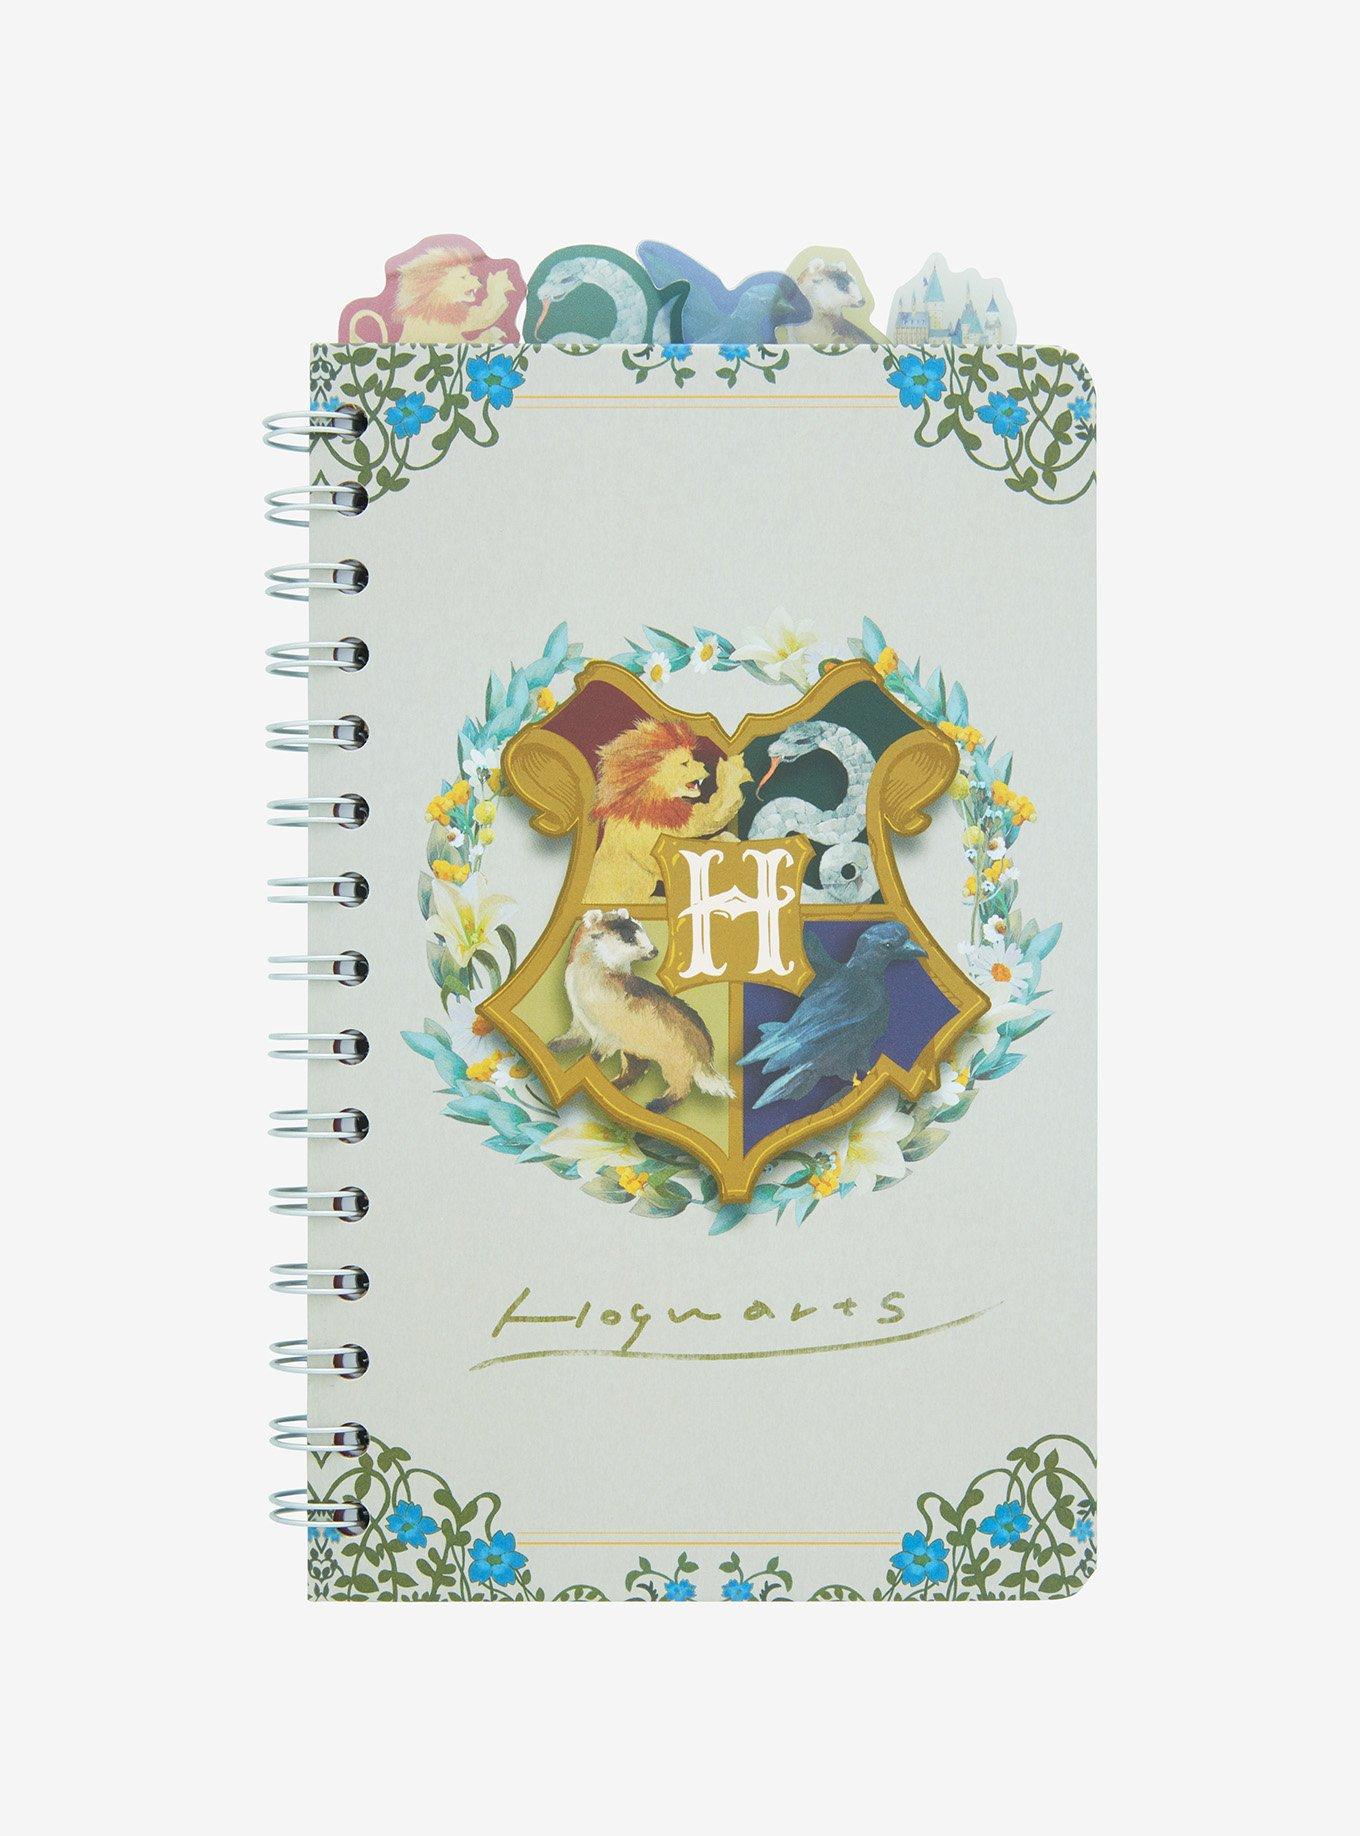 Harry Potter Hogwarts 5-Tab Spiral Notebook